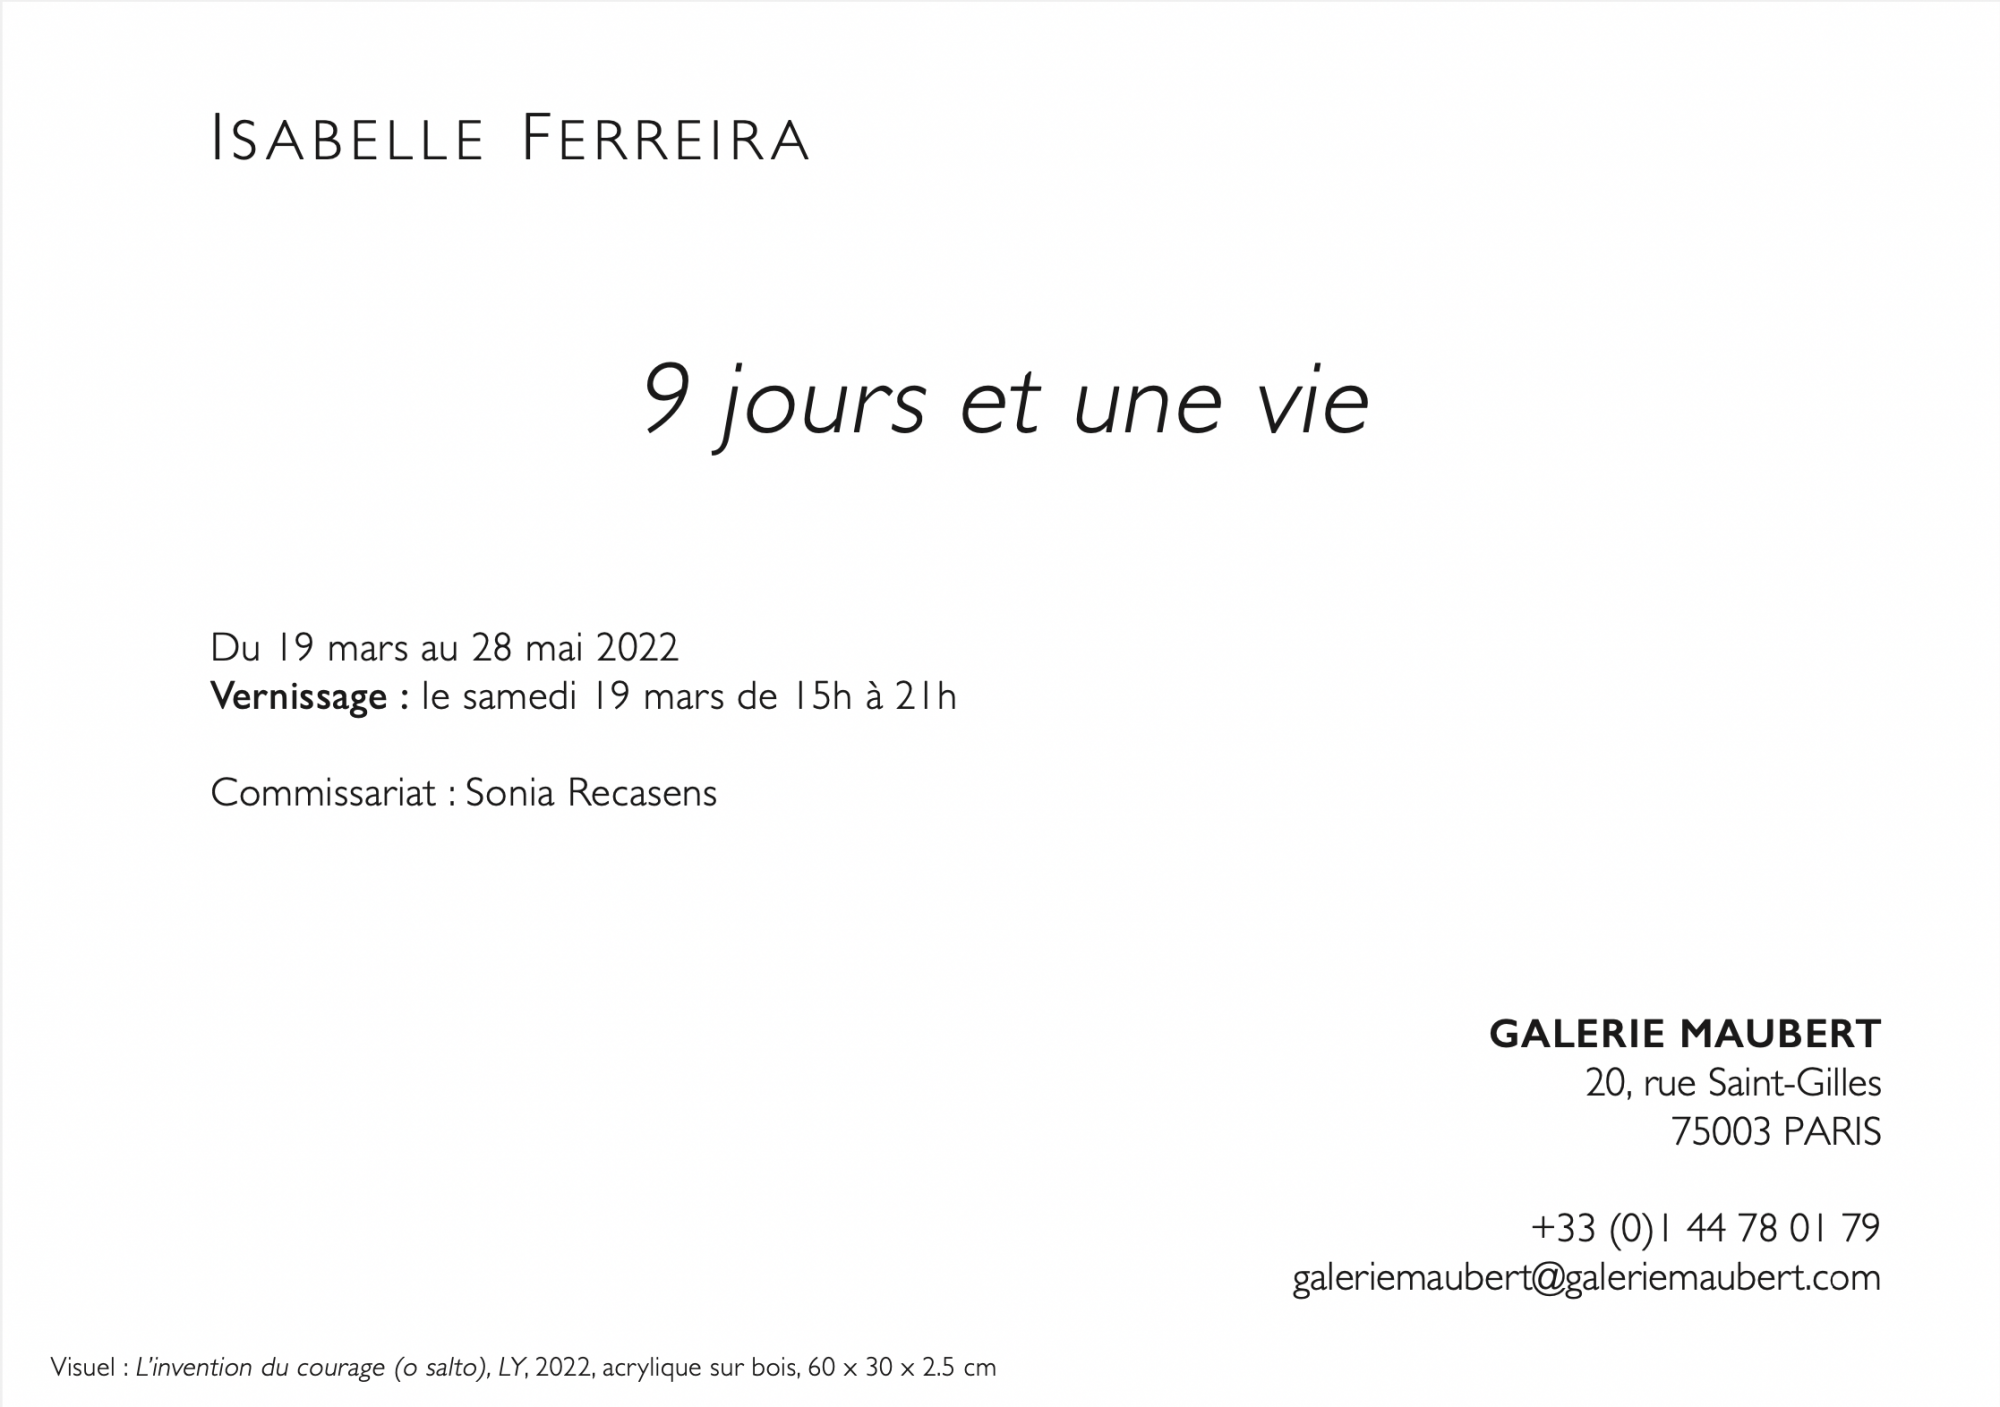 9 jours et une vie, Galerie Maubert, Paris